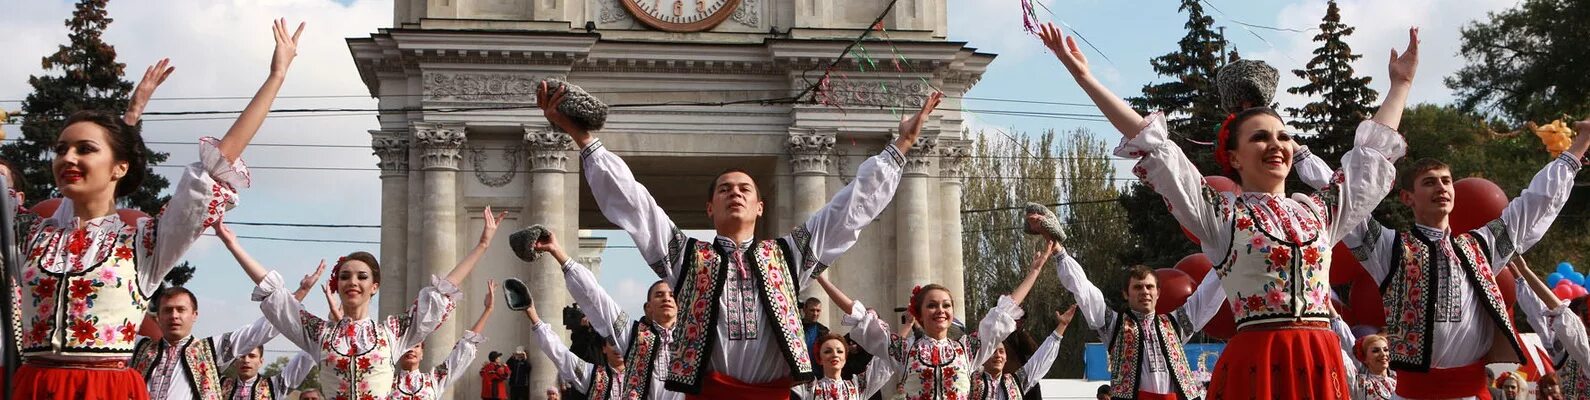 Язык молдаван. Молдаване народ. Культура Молдавии. Молдавский танец. Культура молдаван.